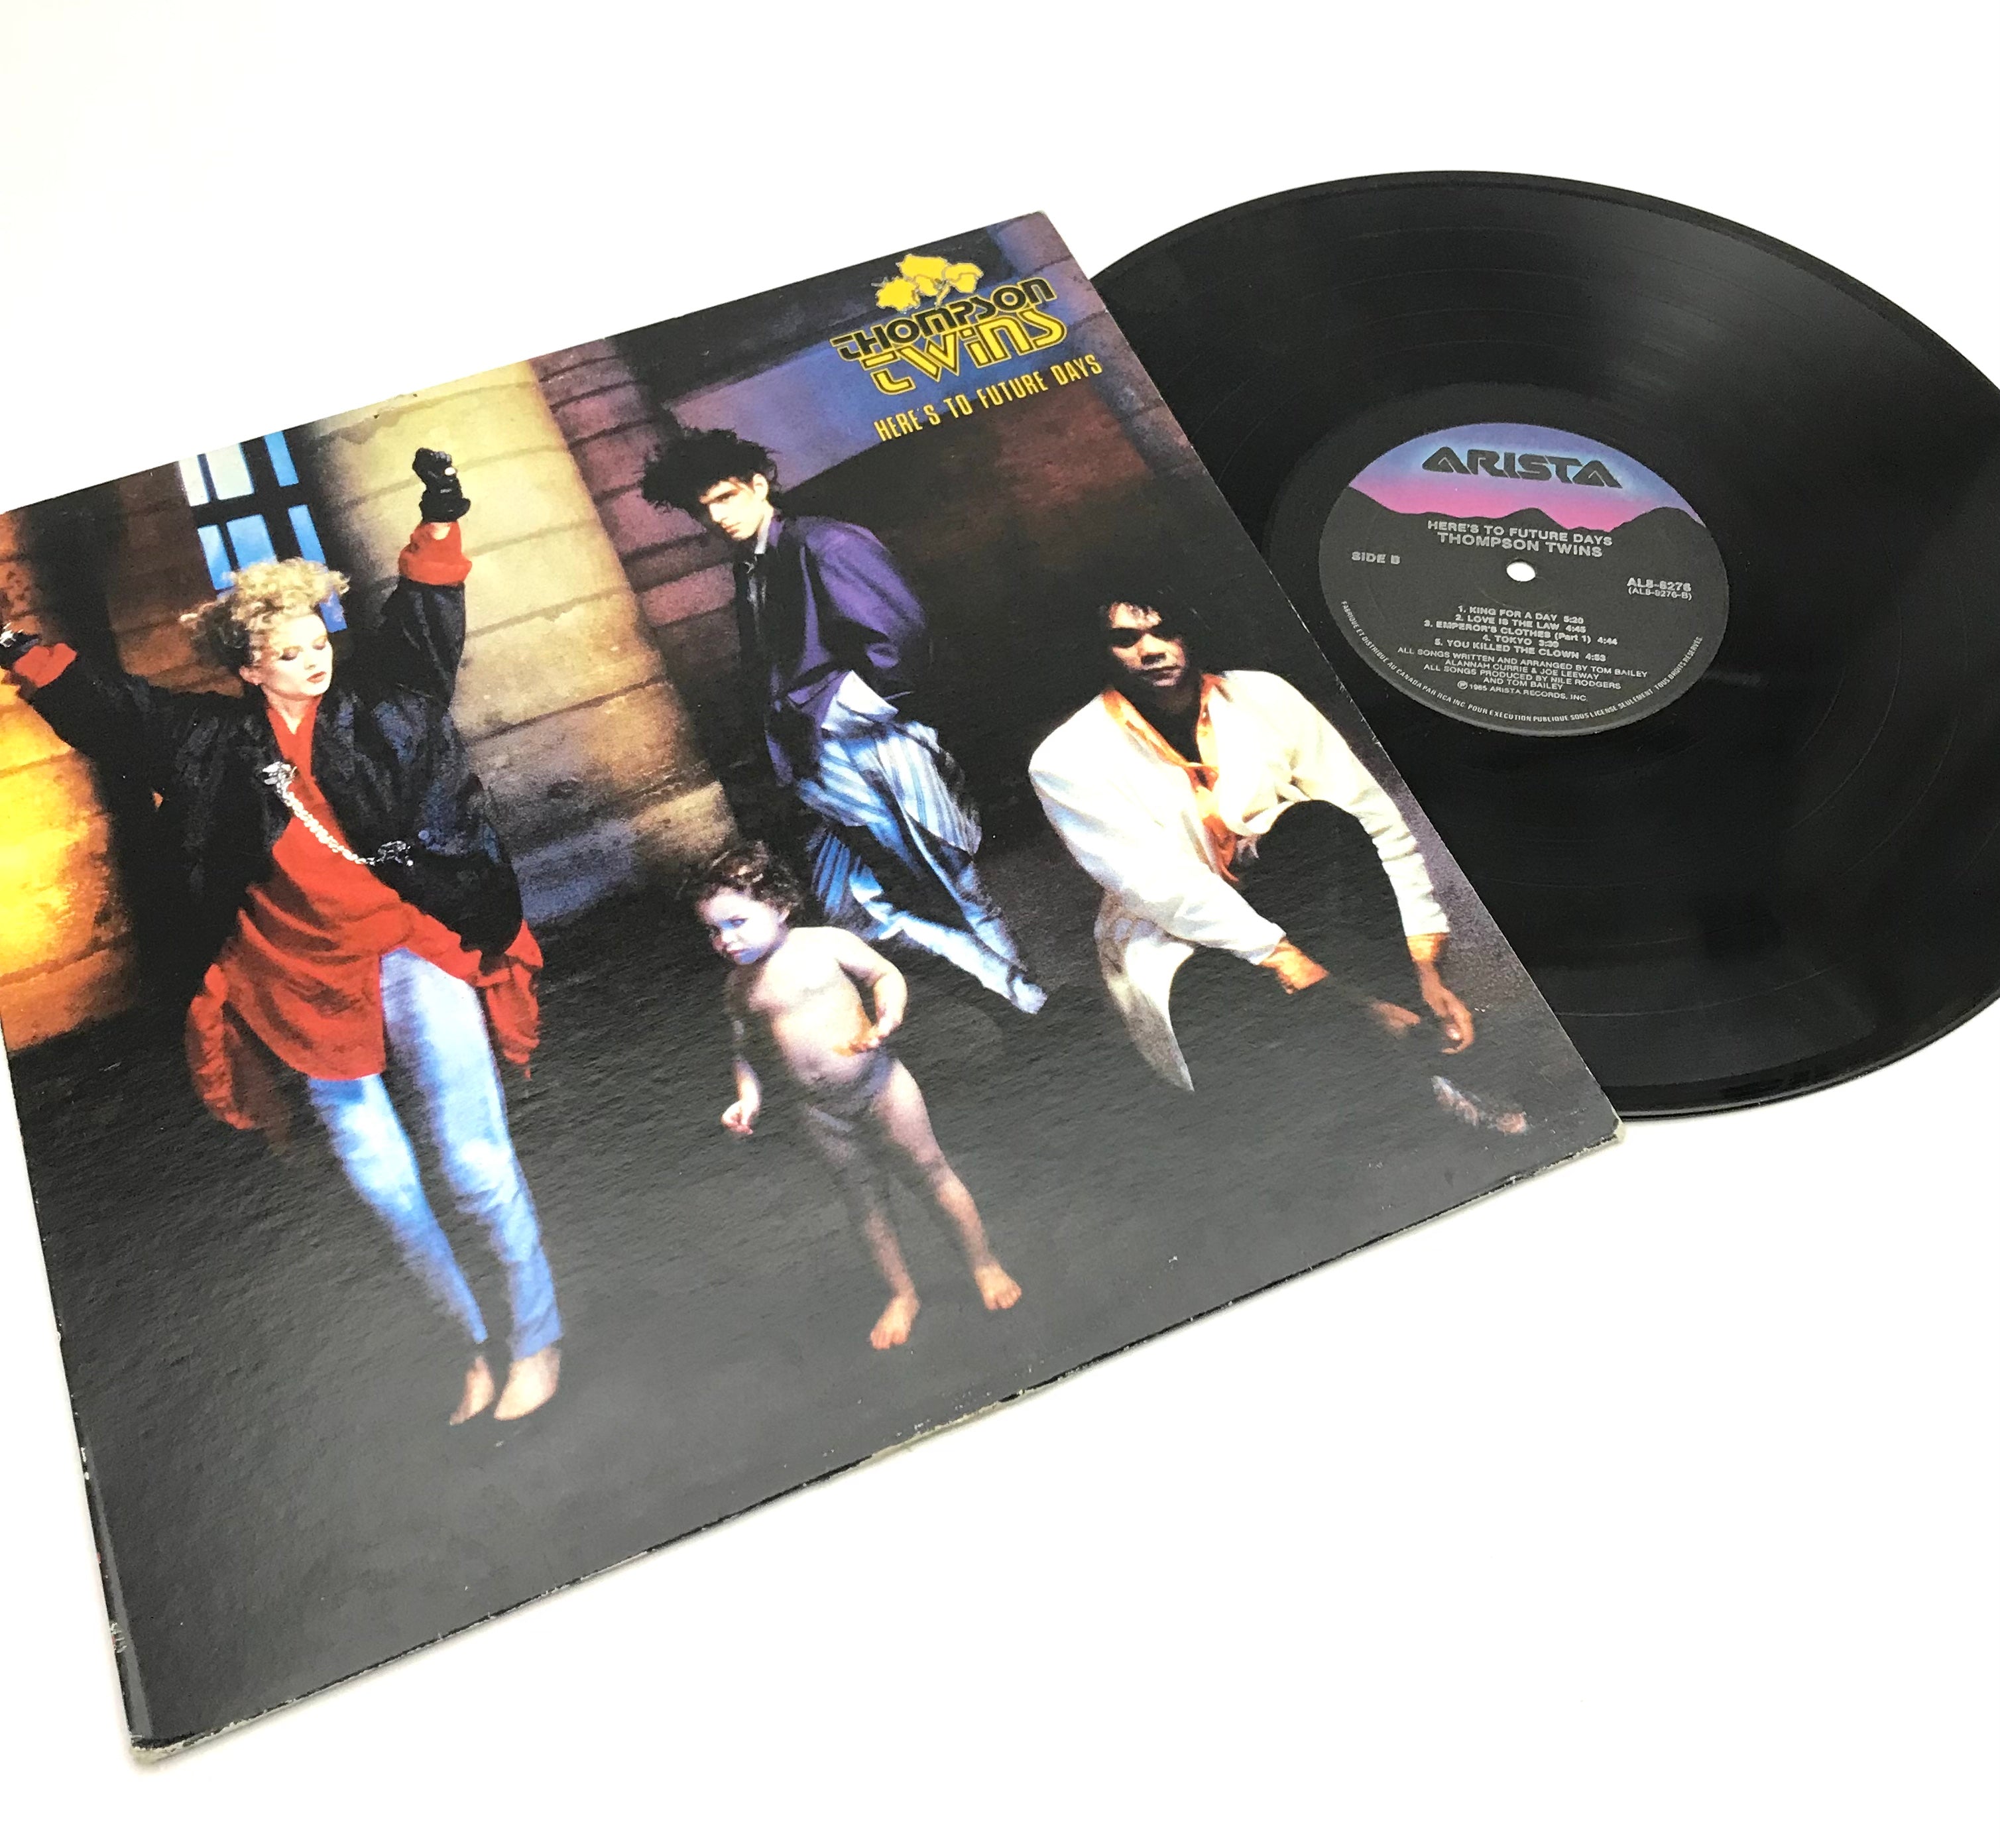 Thompson Twins - Here’s To Future Days - Vinyl LP - 1985